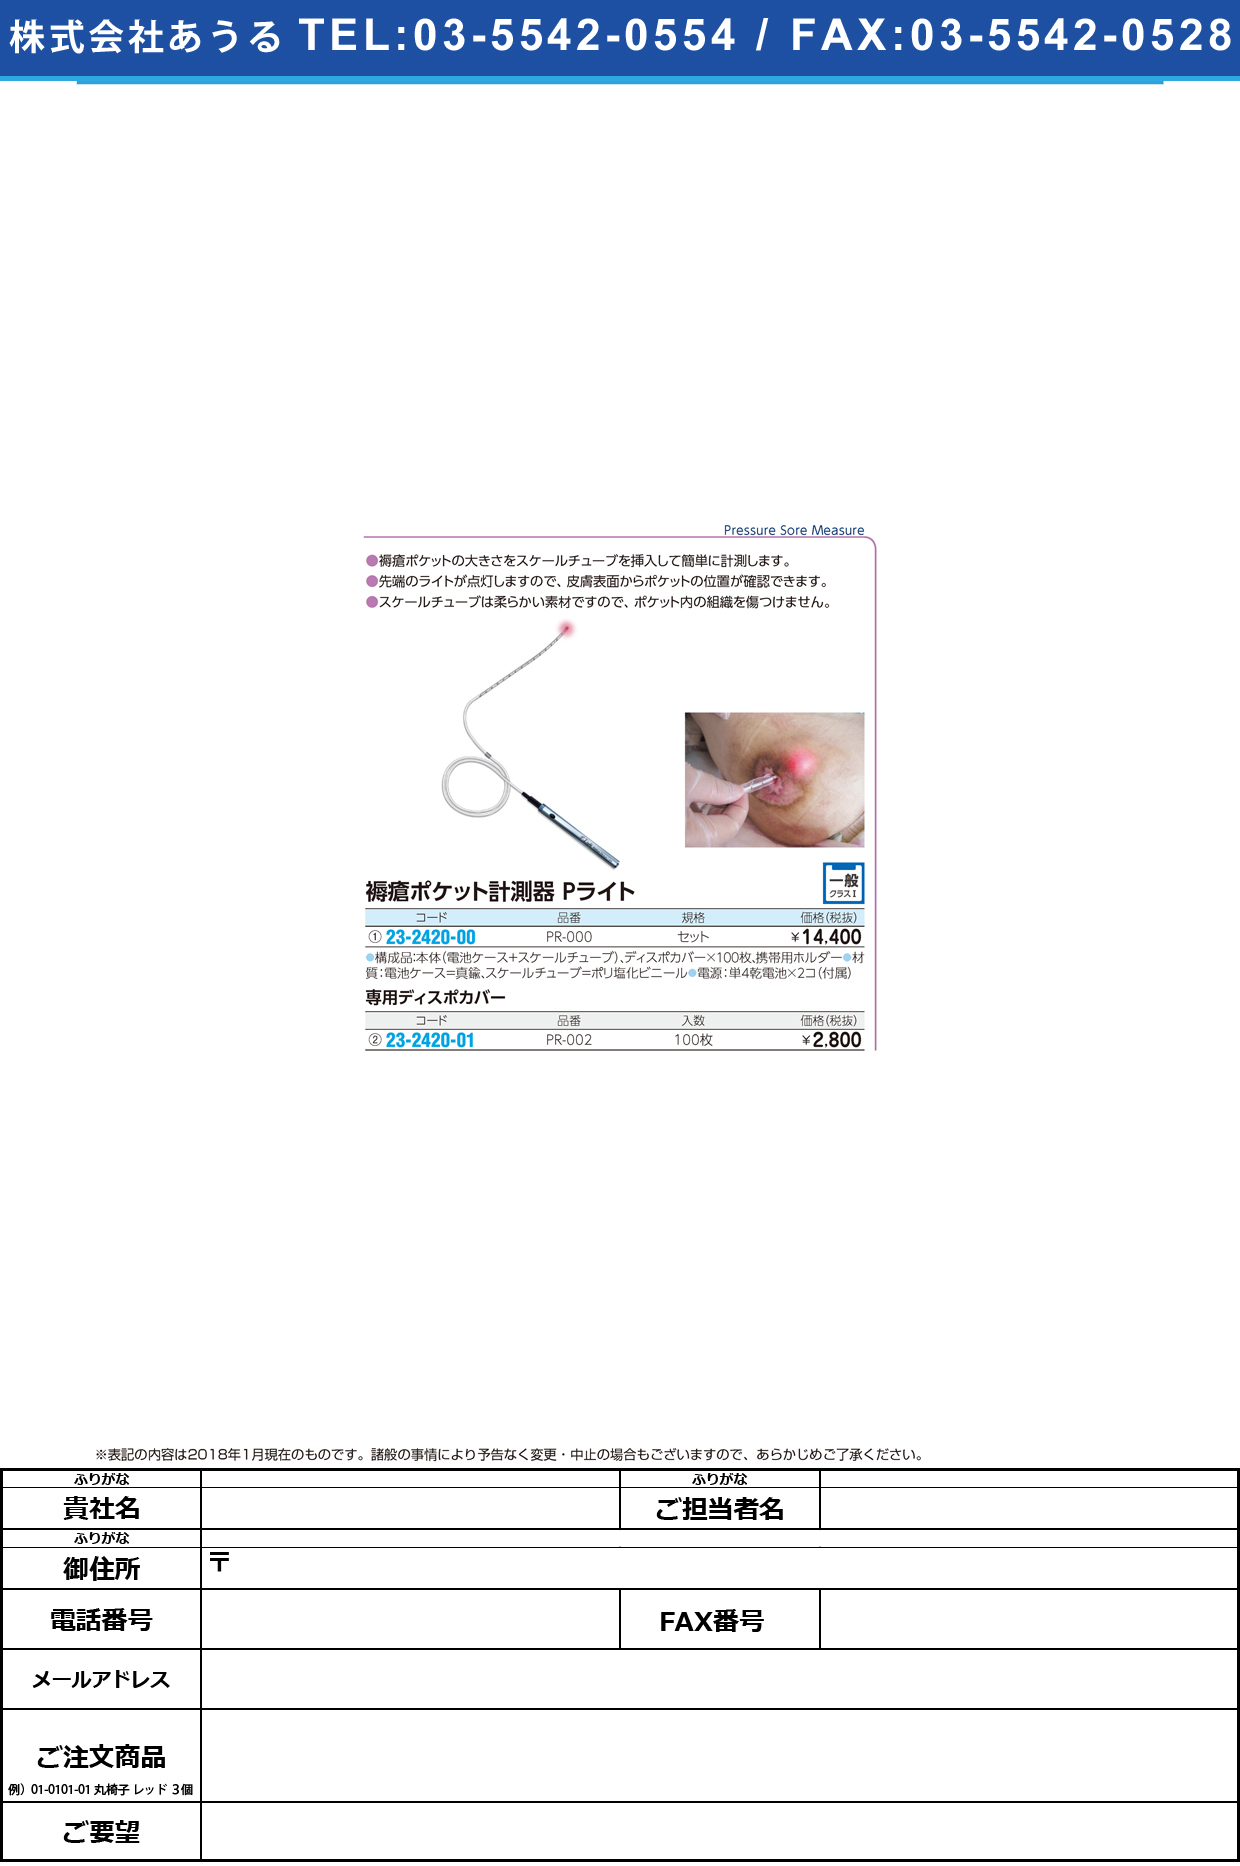 (23-2420-01)Ｐライト用ディスポカバー PR-002(100ｲﾘ) Pﾗｲﾄﾖｳﾃﾞｨｽﾎﾟｶﾊﾞｰ【1箱単位】【2018年カタログ商品】